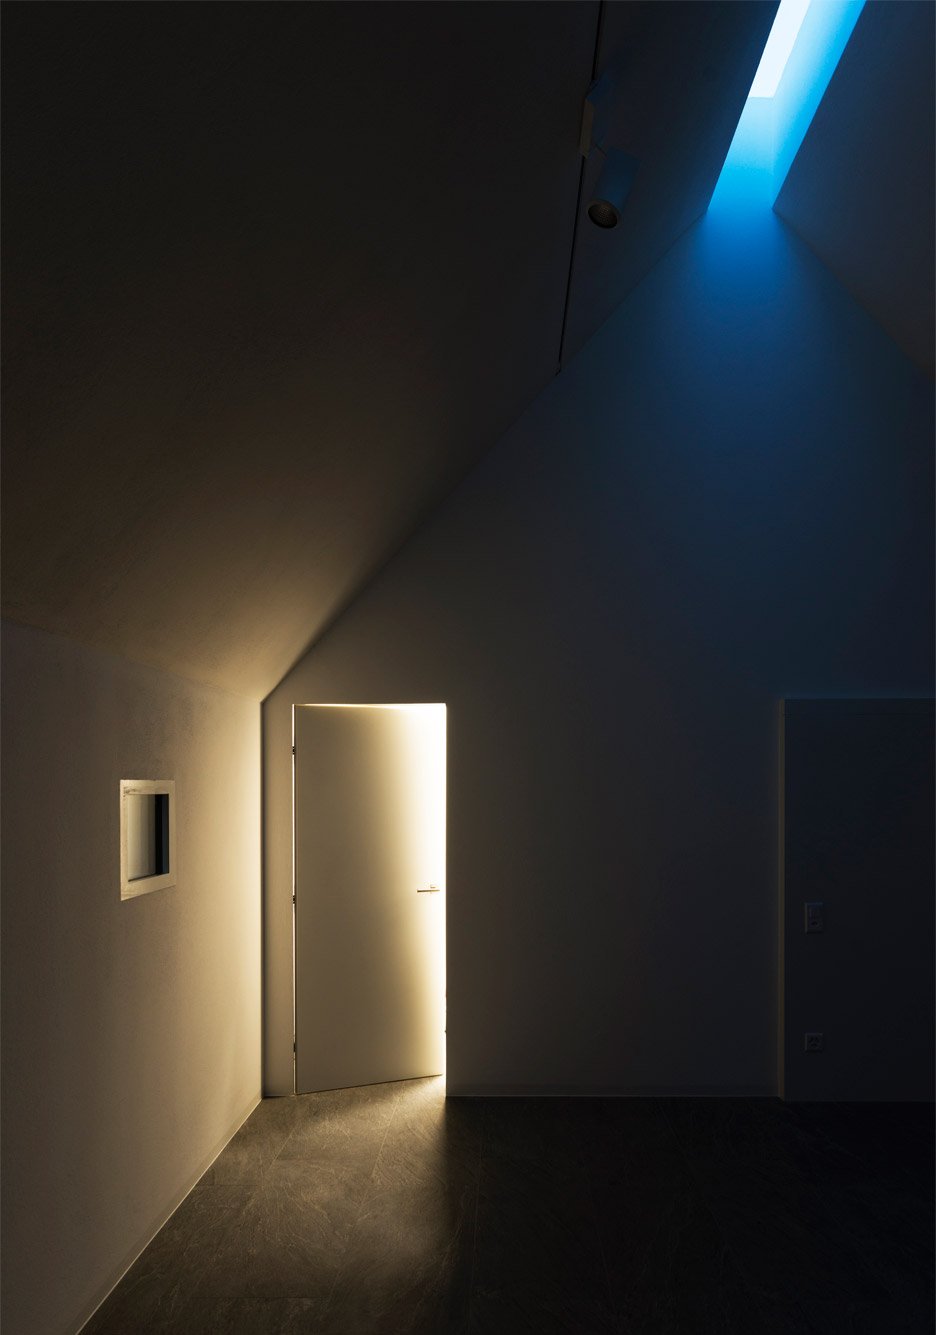 Museu Mecri renovation by Studio Inches in Switzerland